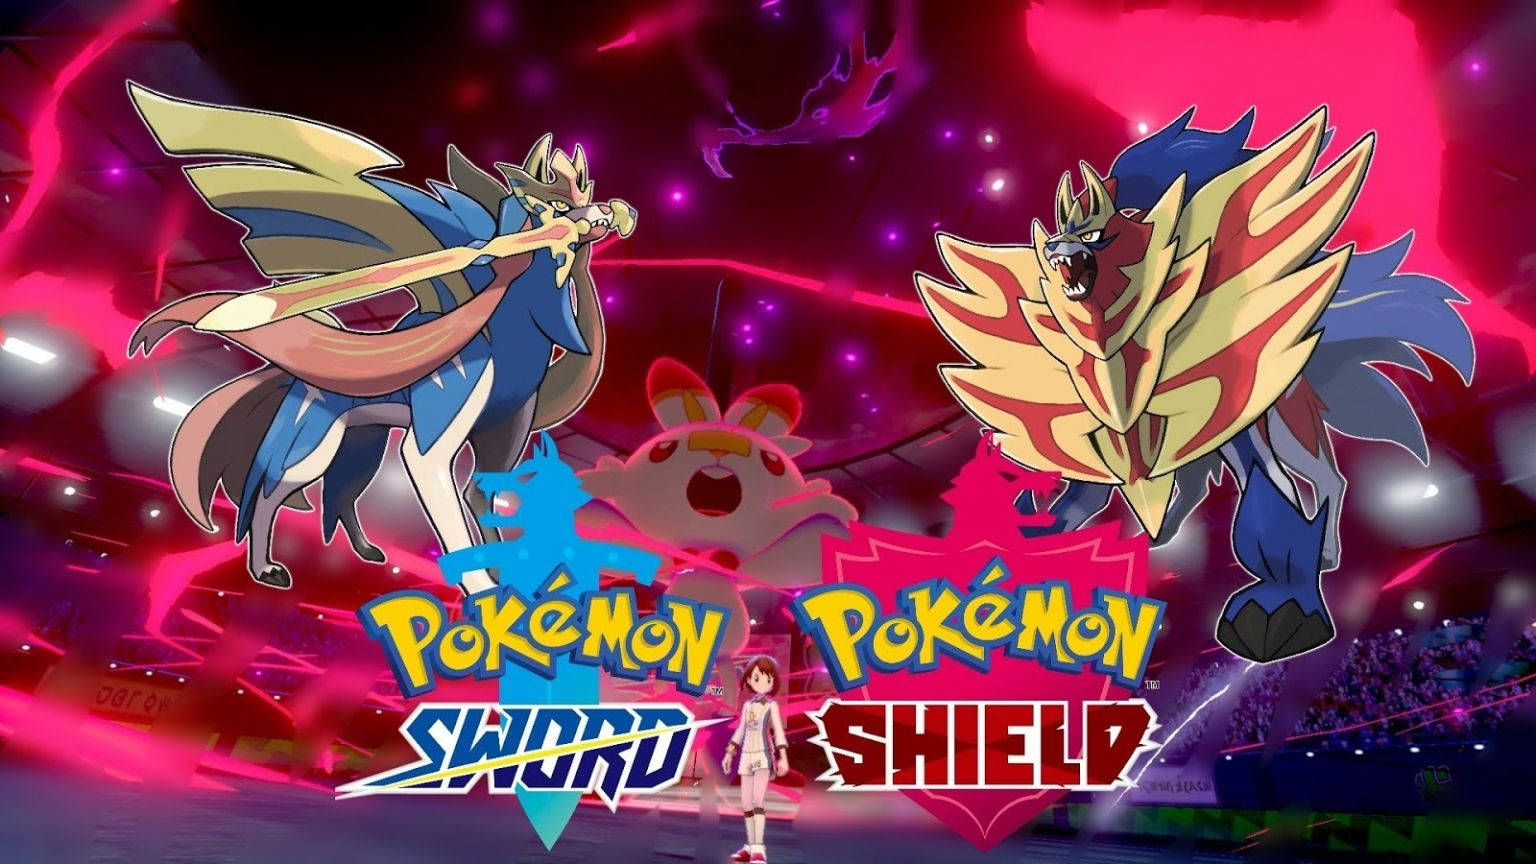 Pokémon Sword And Shield Hd Cover Wallpaper